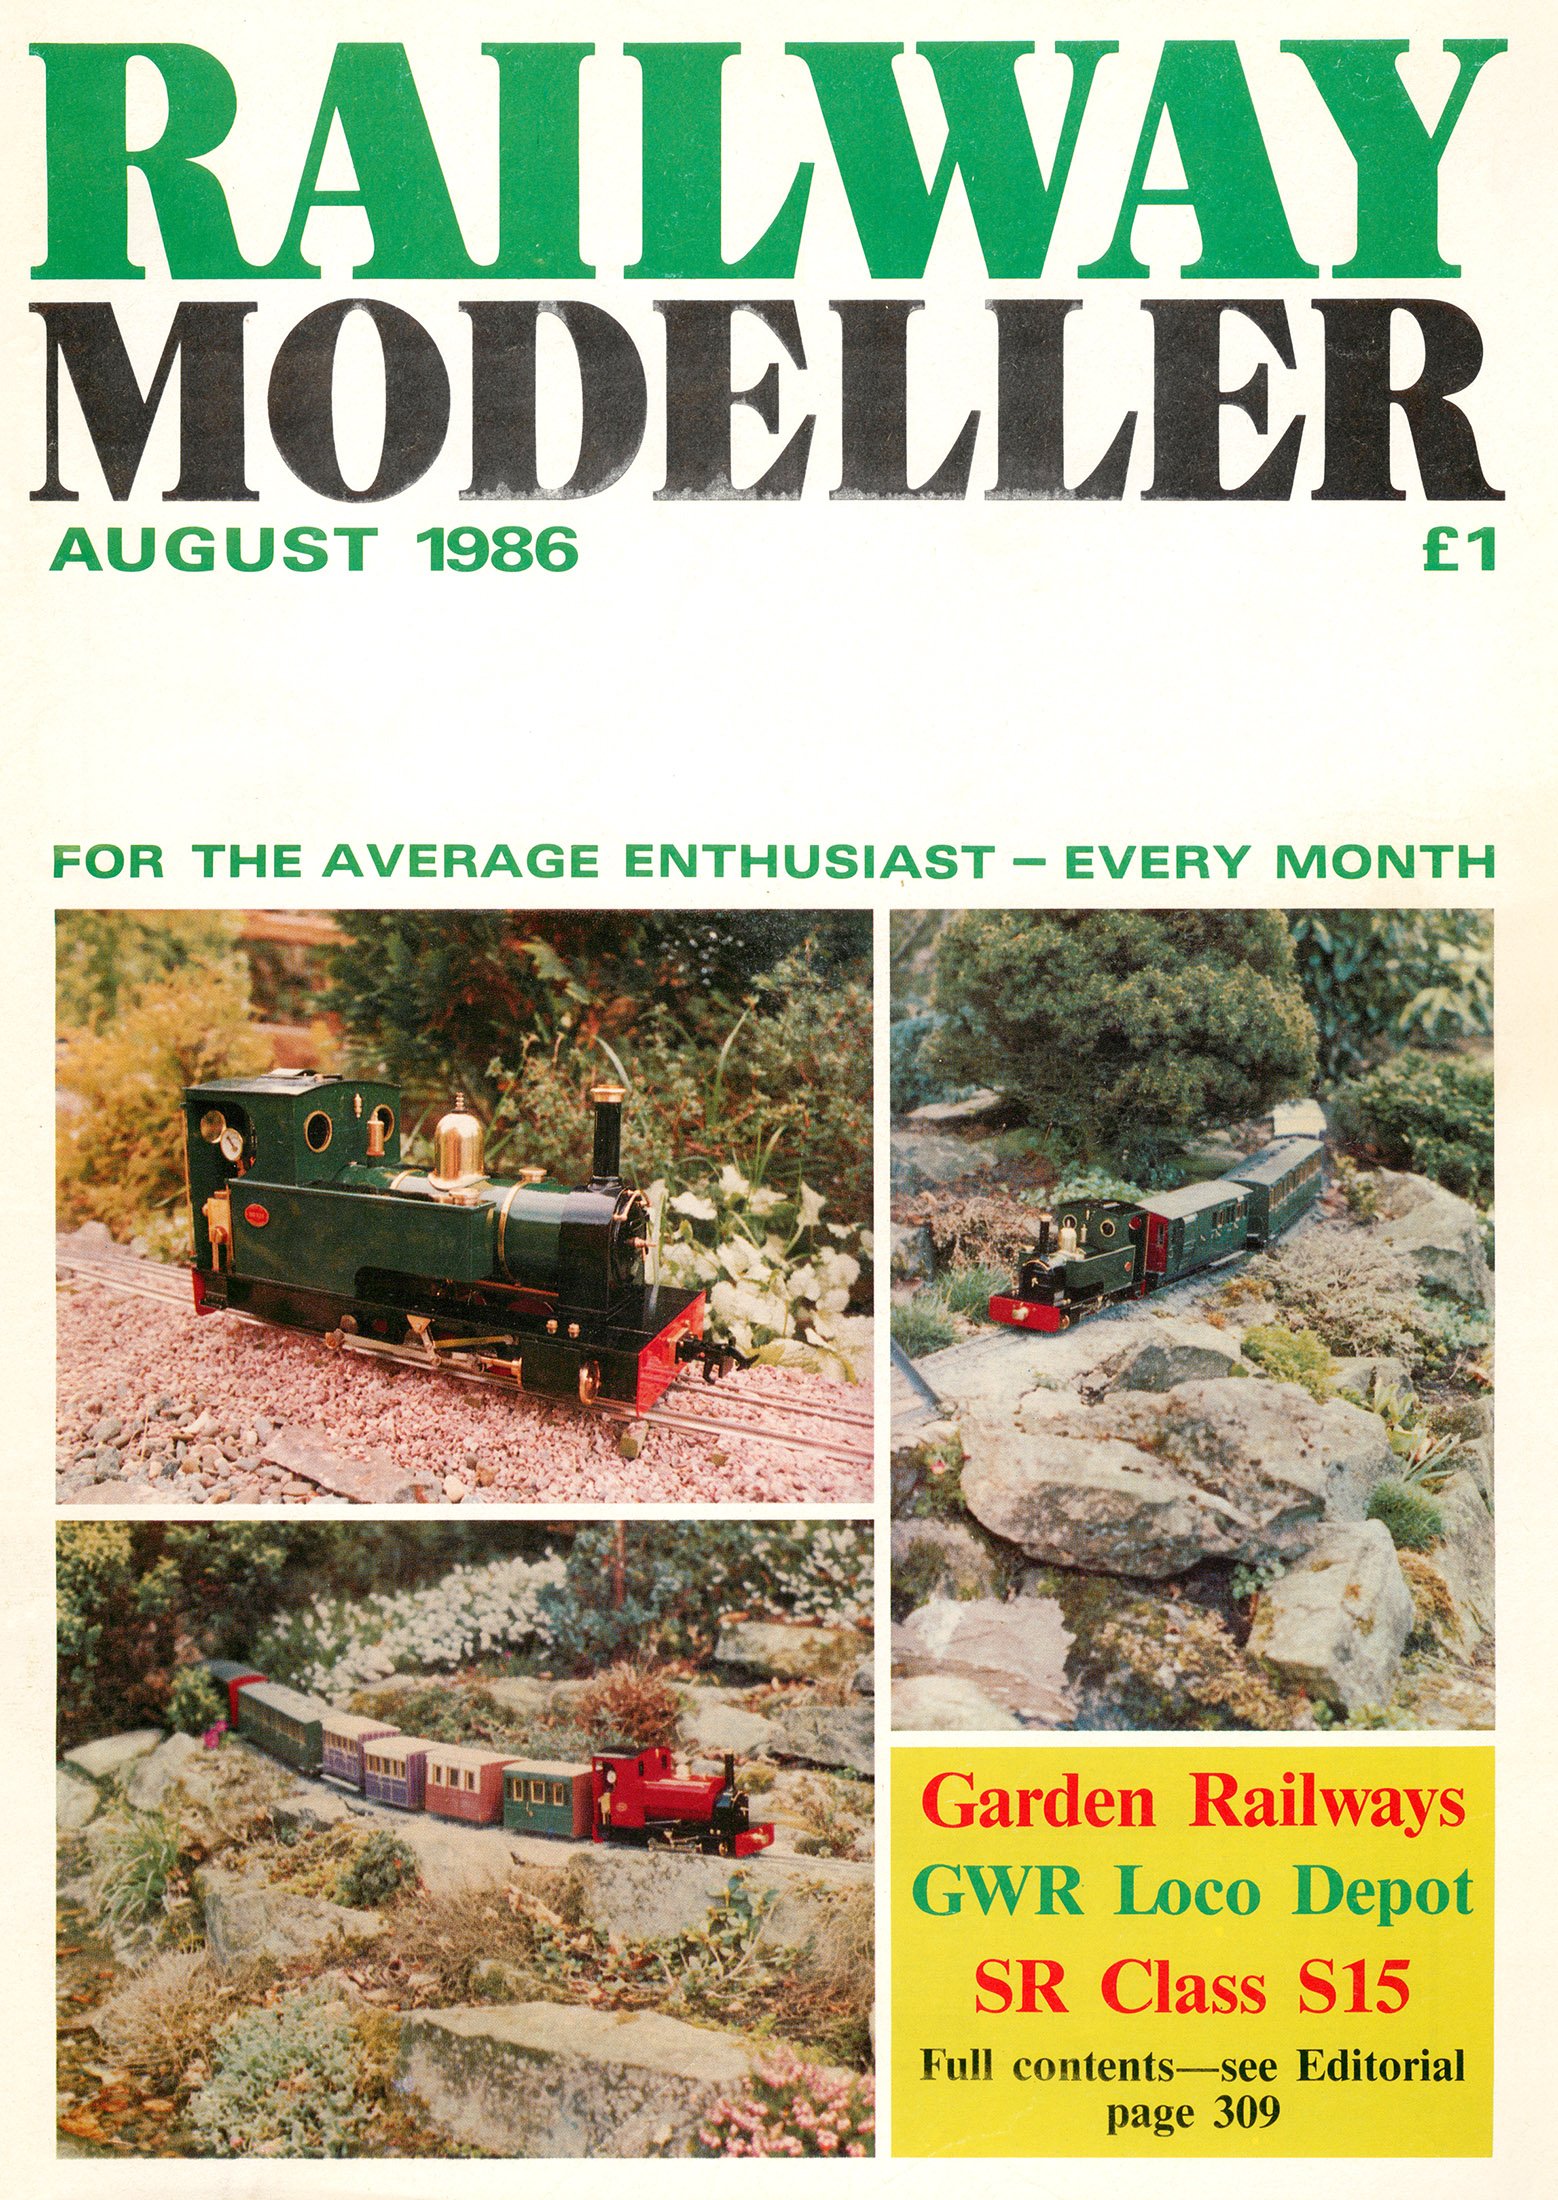 Railway Modeller Issue 430 (August 1986)